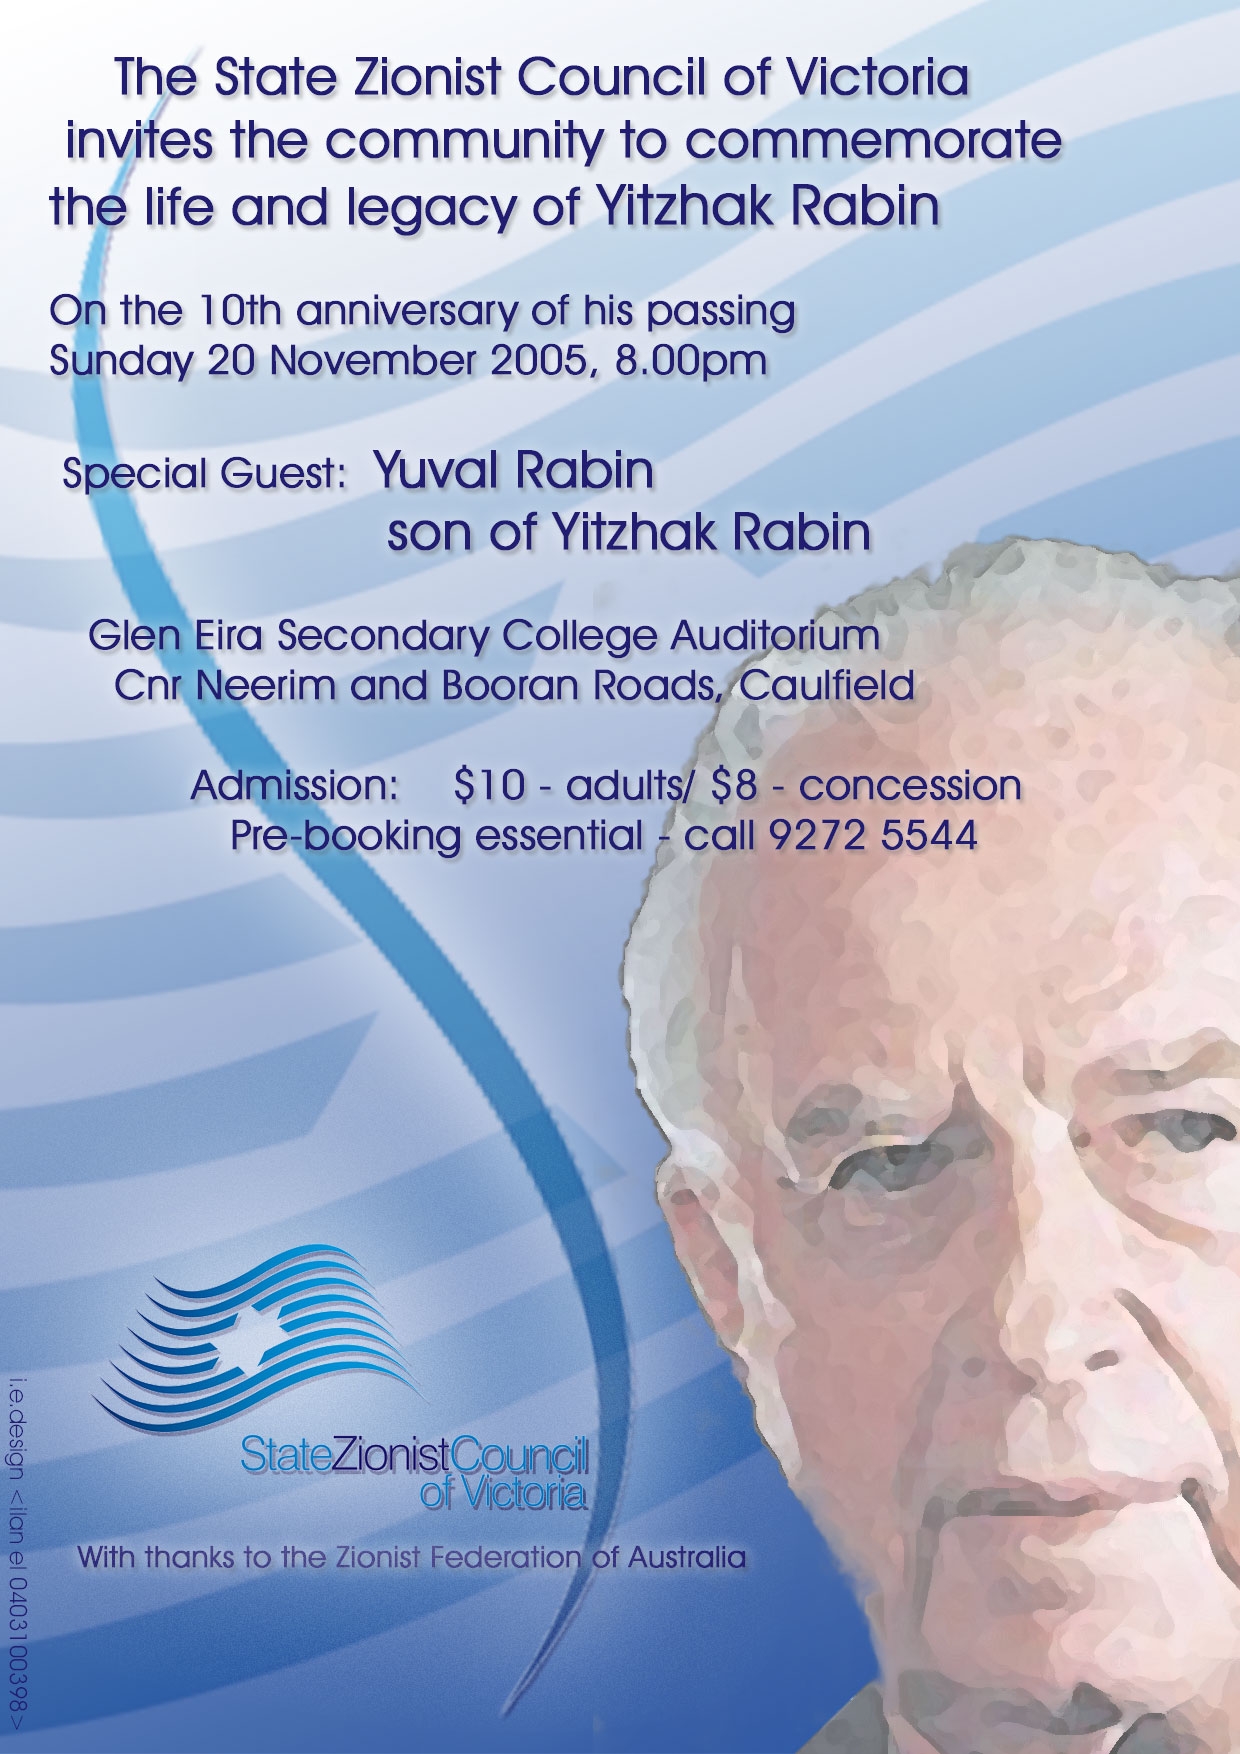 State Zionist Council Victoria meet Yuval Rabin